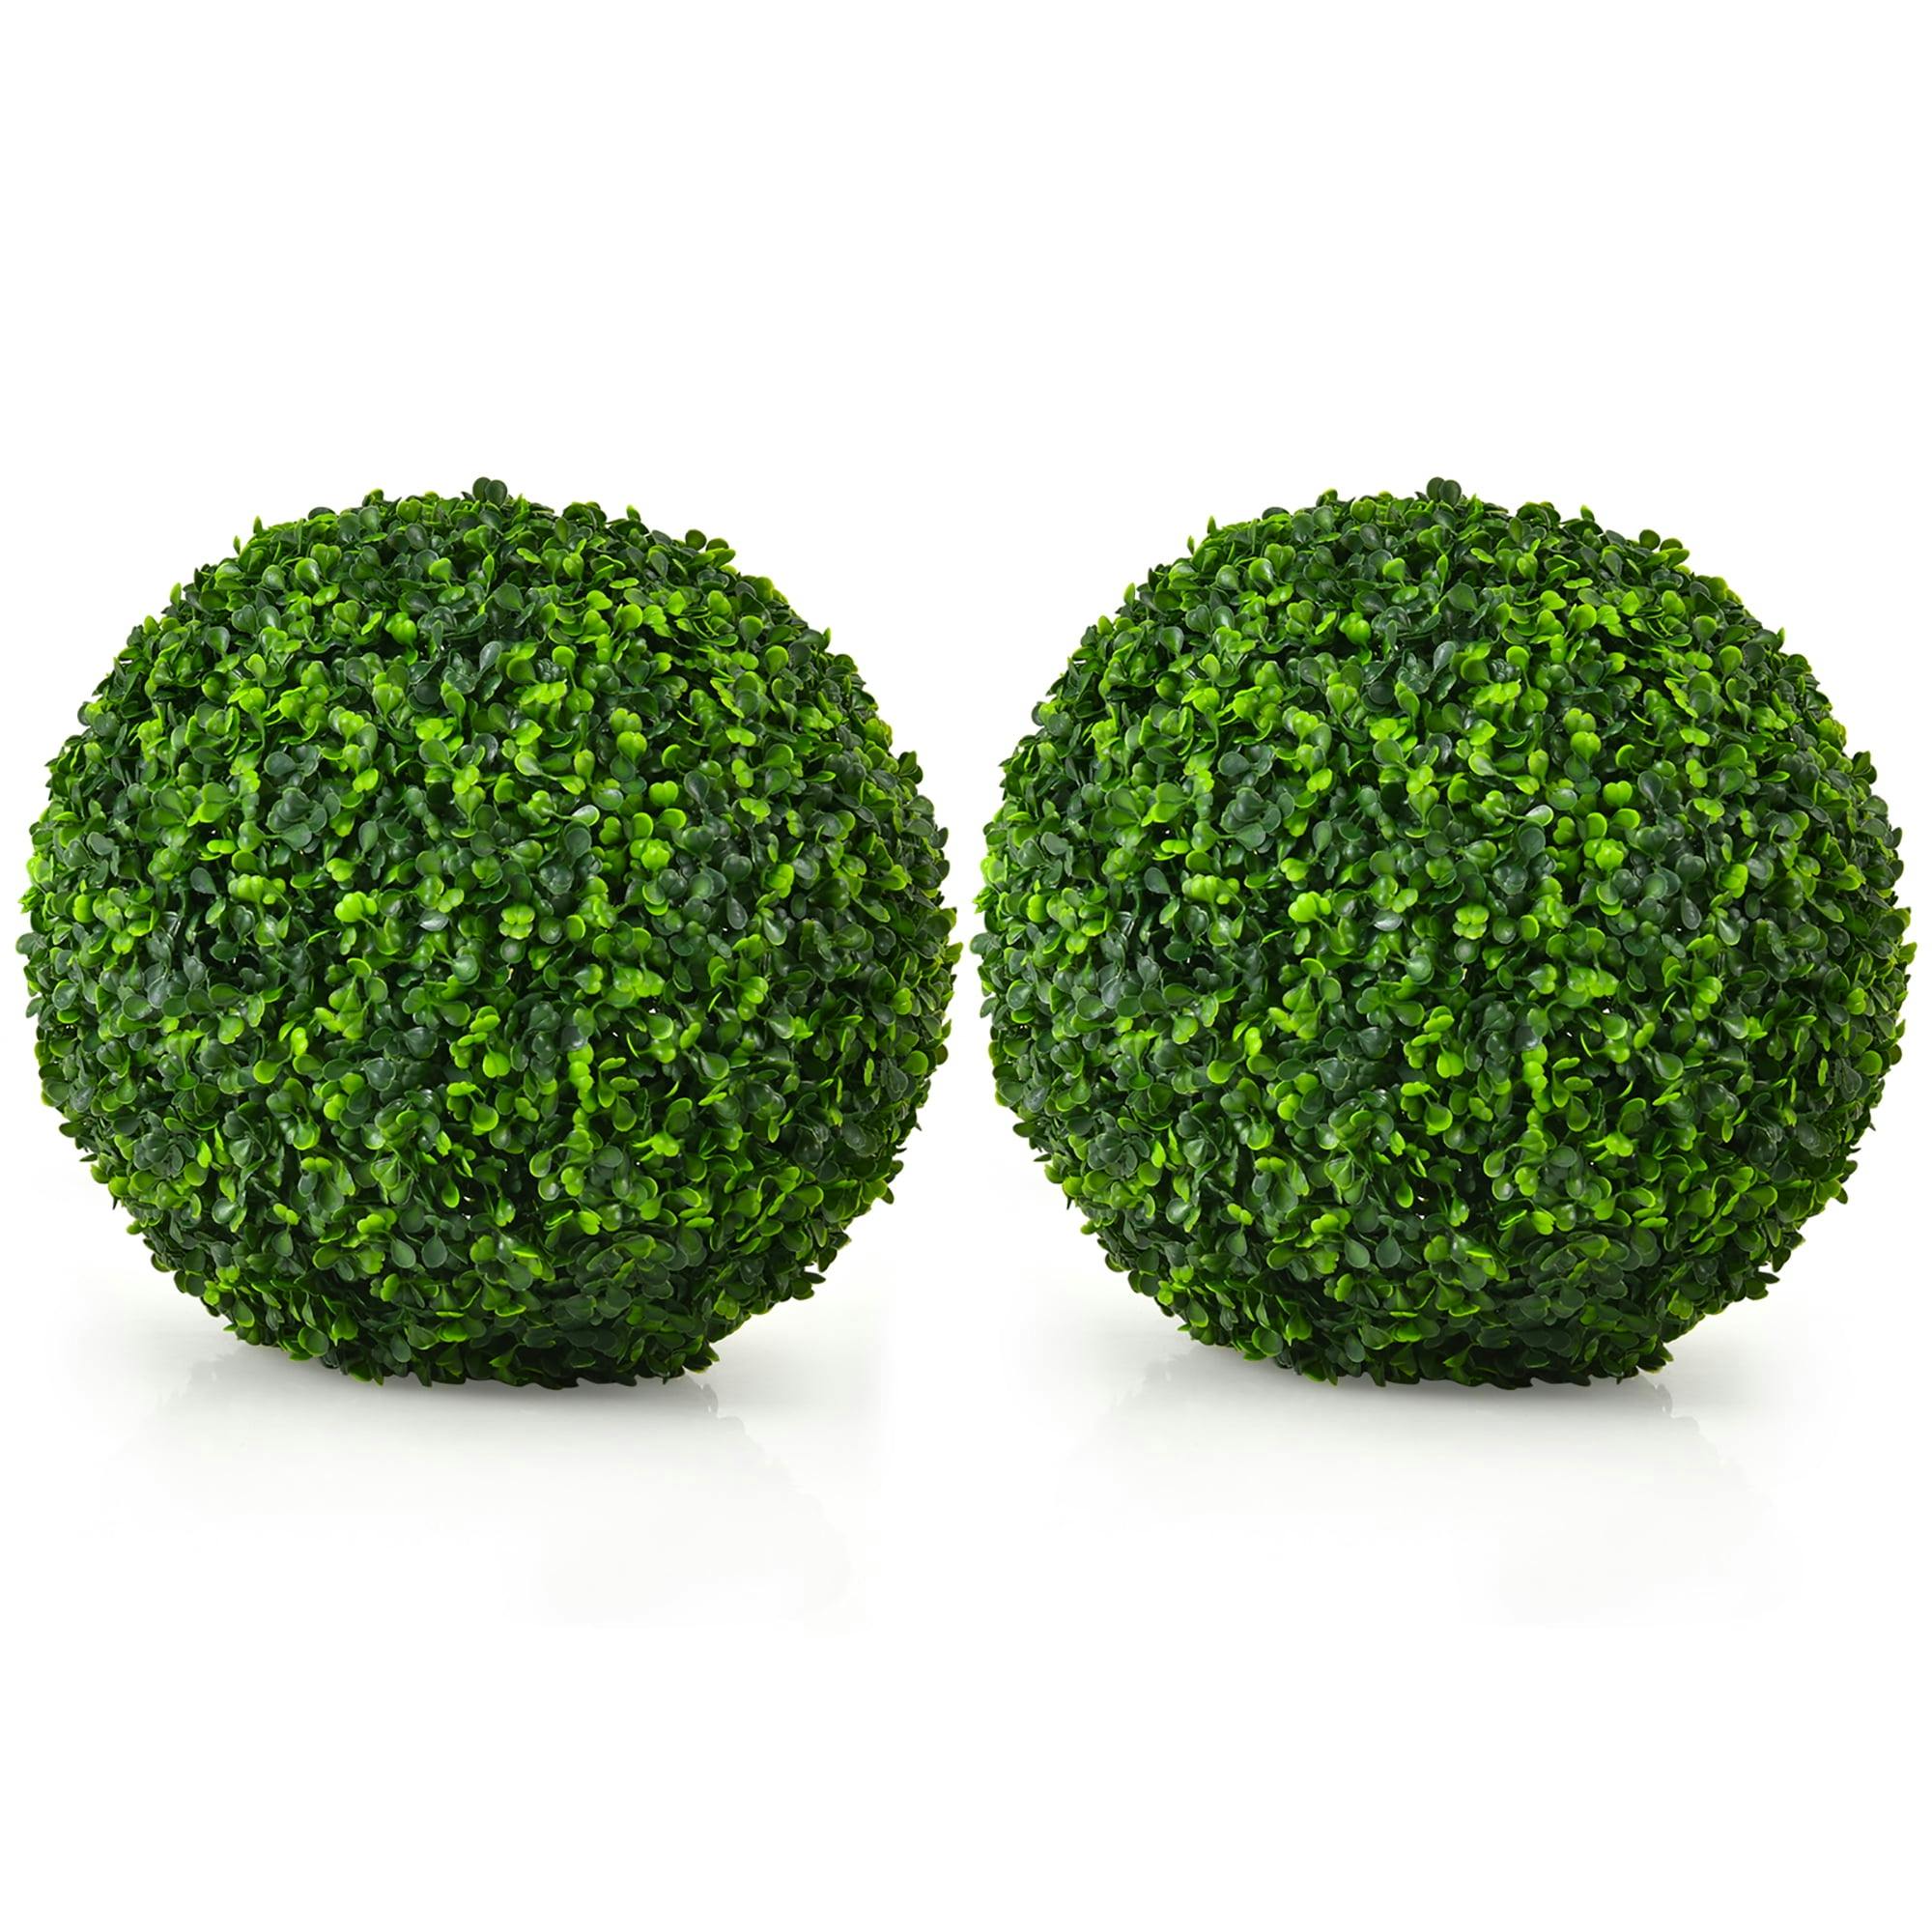 Lush Green 15.7'' UV-Protected Artificial Boxwood Topiary Balls